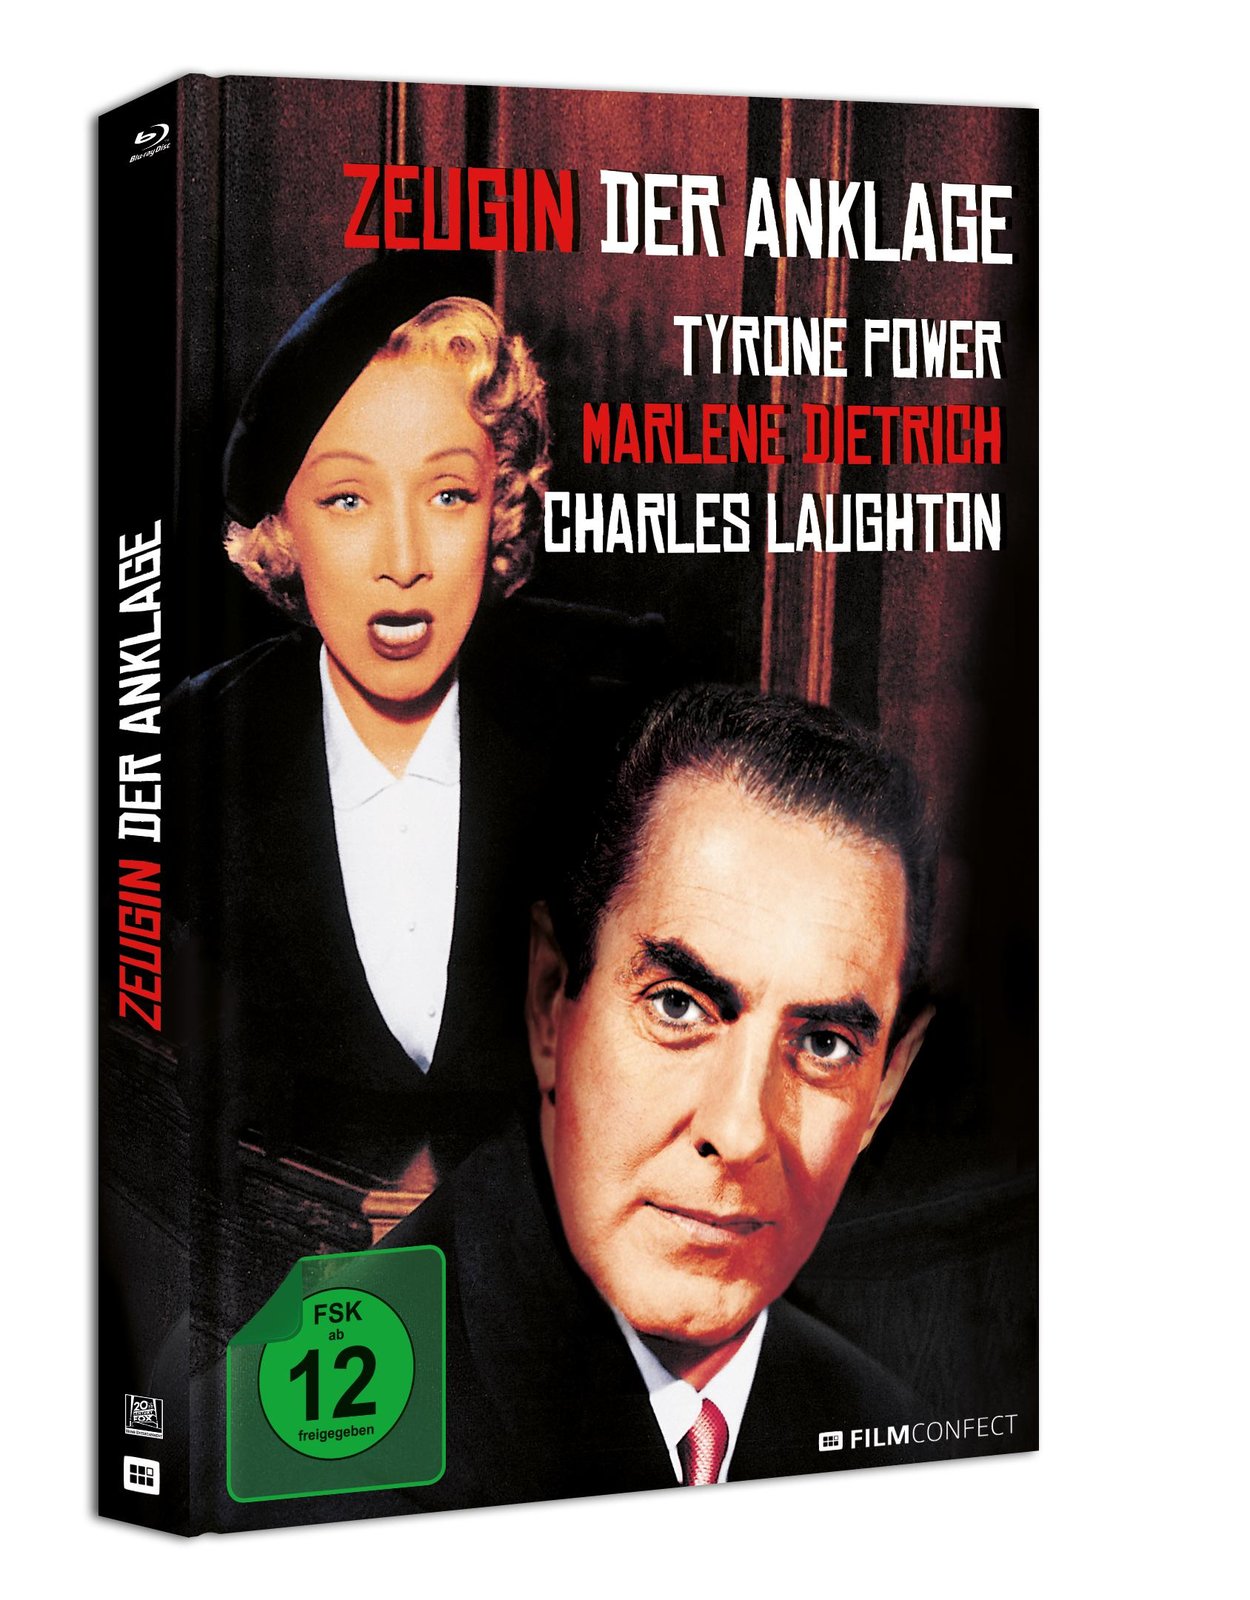 Zeugin der Anklage - Limited Mediabook Edition (DVD+blu-ray)